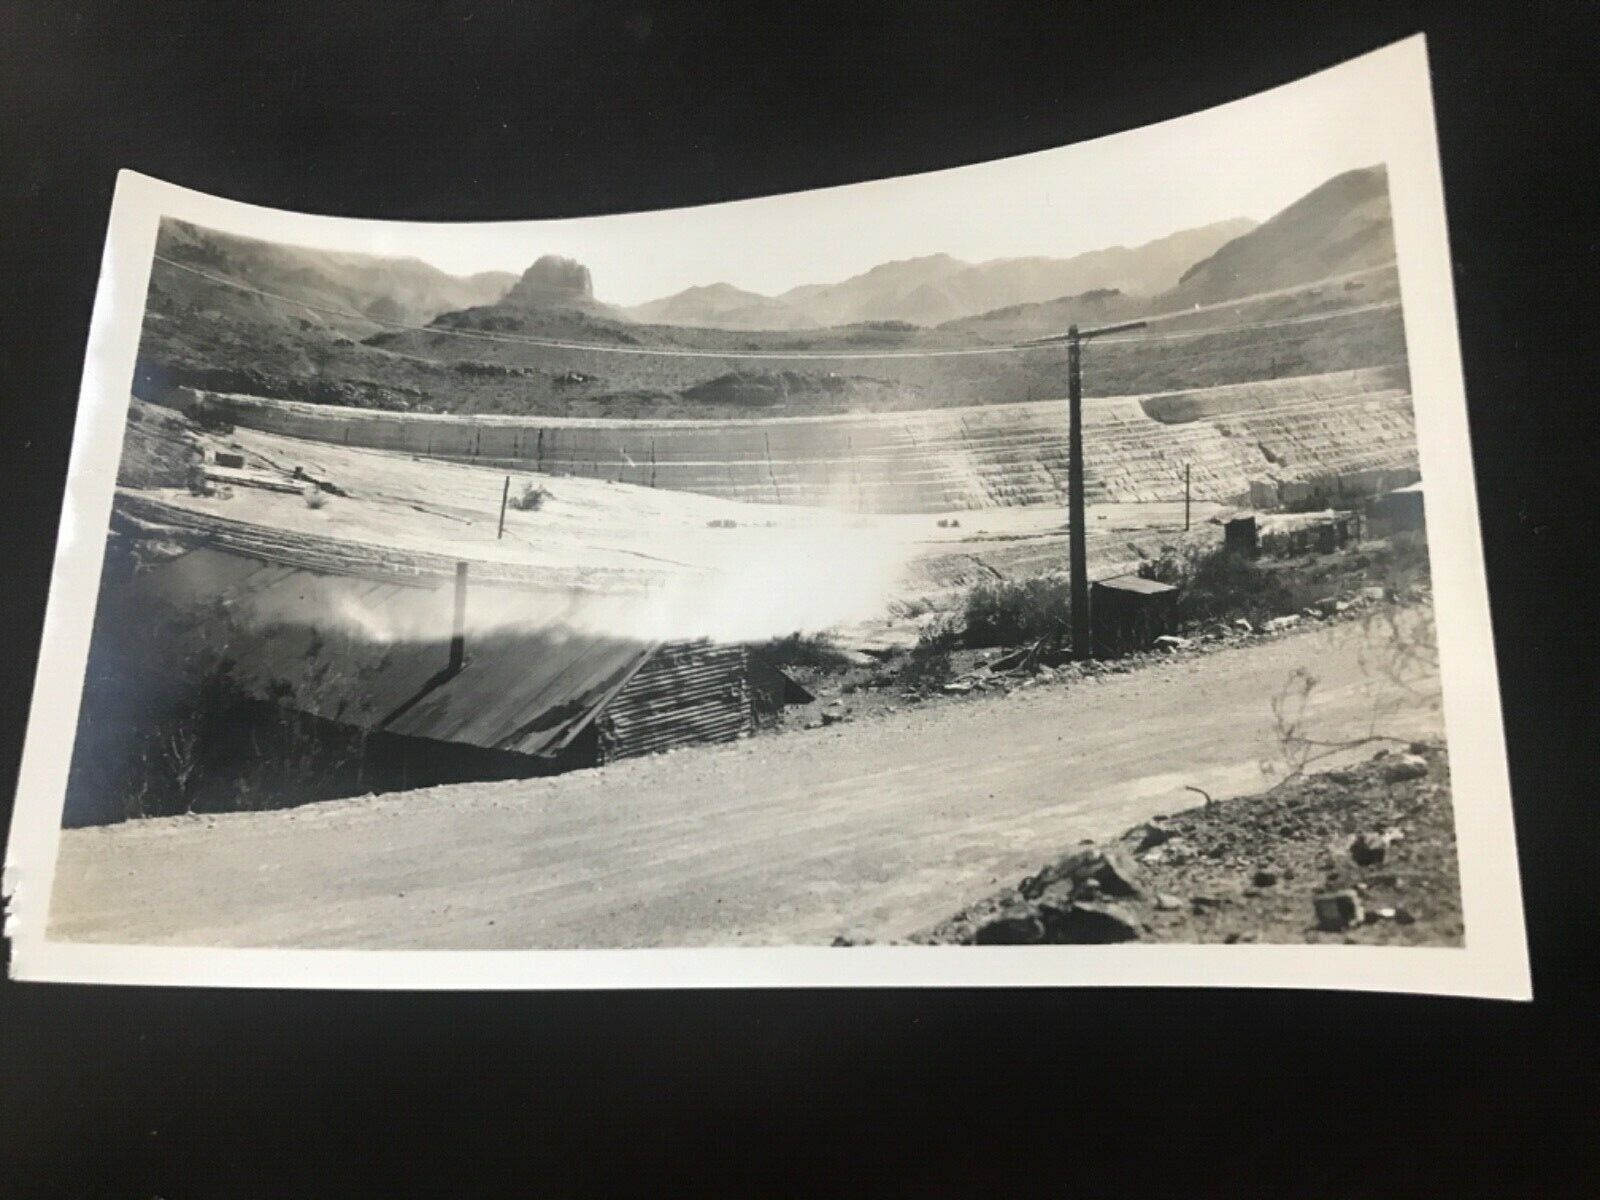 Vintage Photo 1920s Arizona Gold Mines Road Trip Along the West Coast B&W VGC